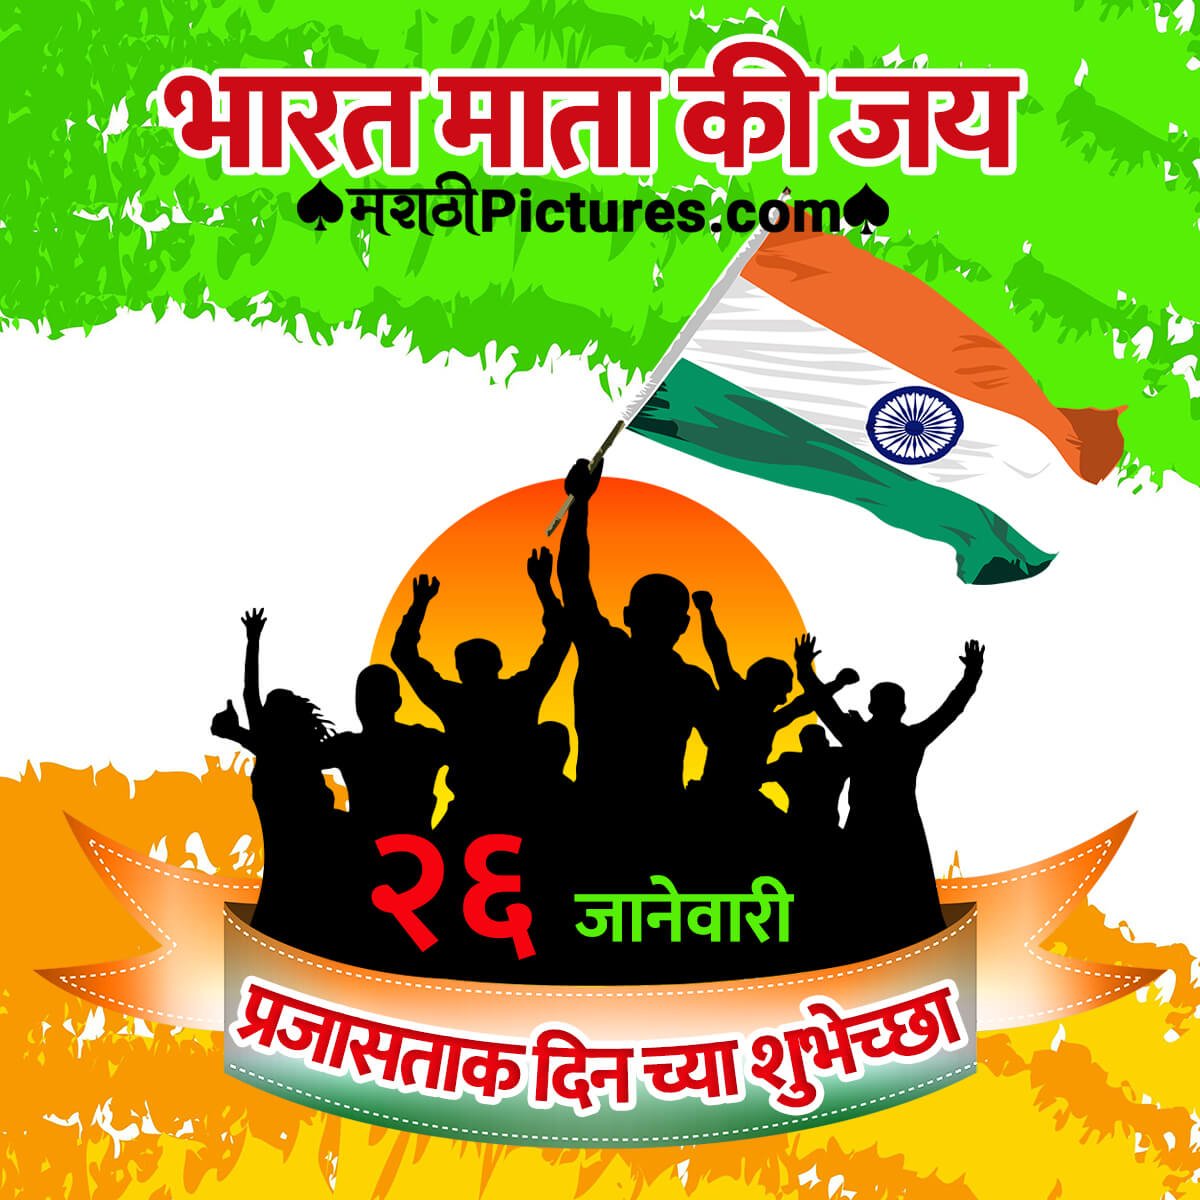 Republic Day Image For Whatsapp In Marathi